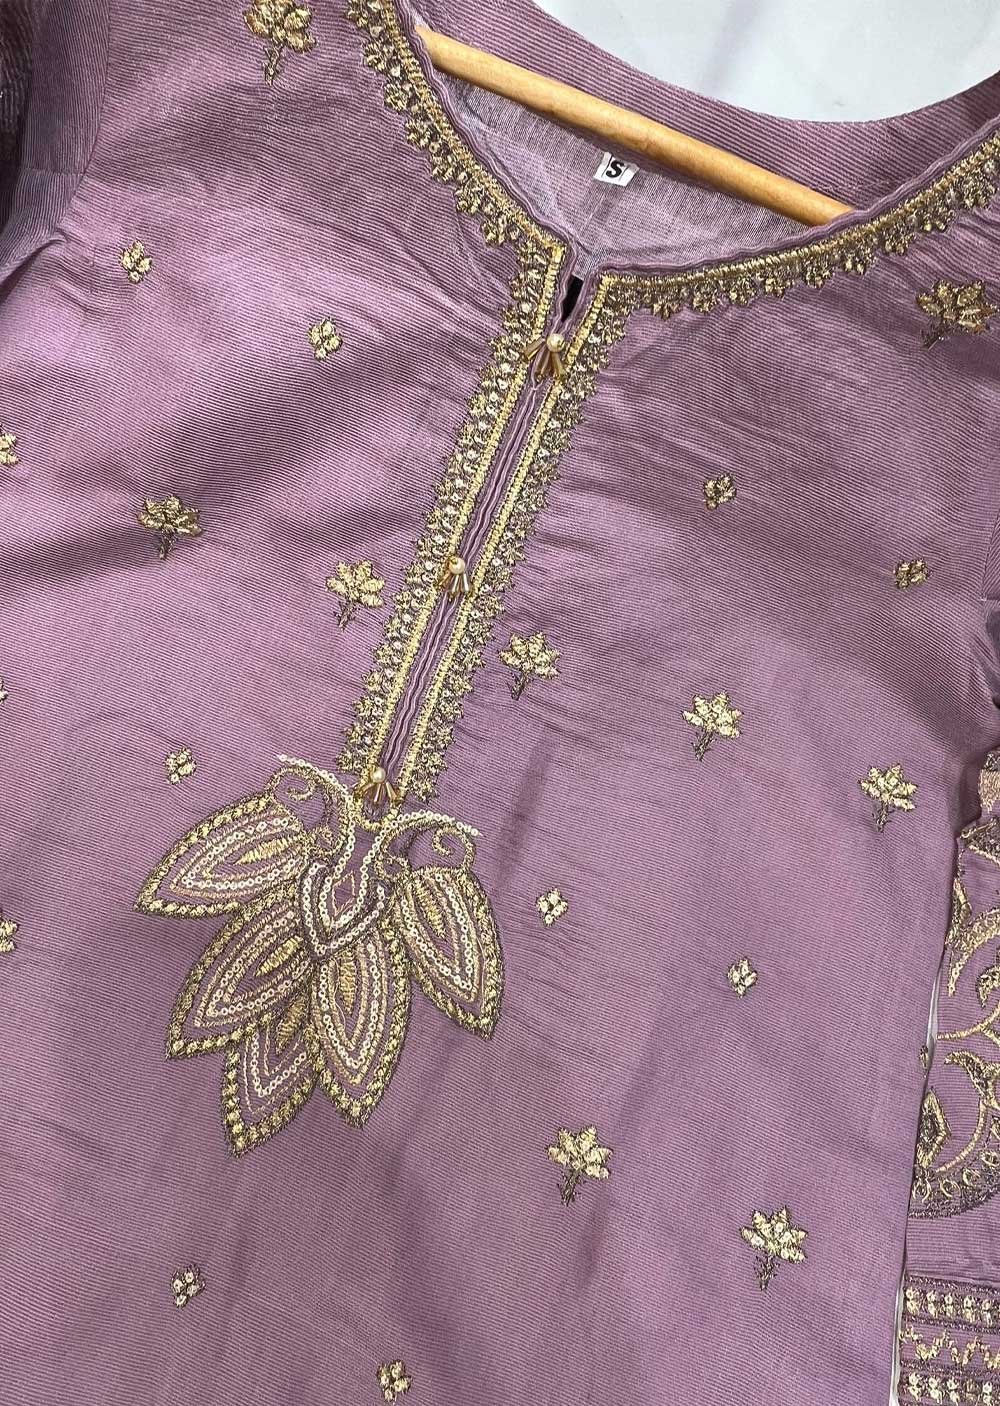 KLD134 Lilac Readymade Linen Suit - Memsaab Online